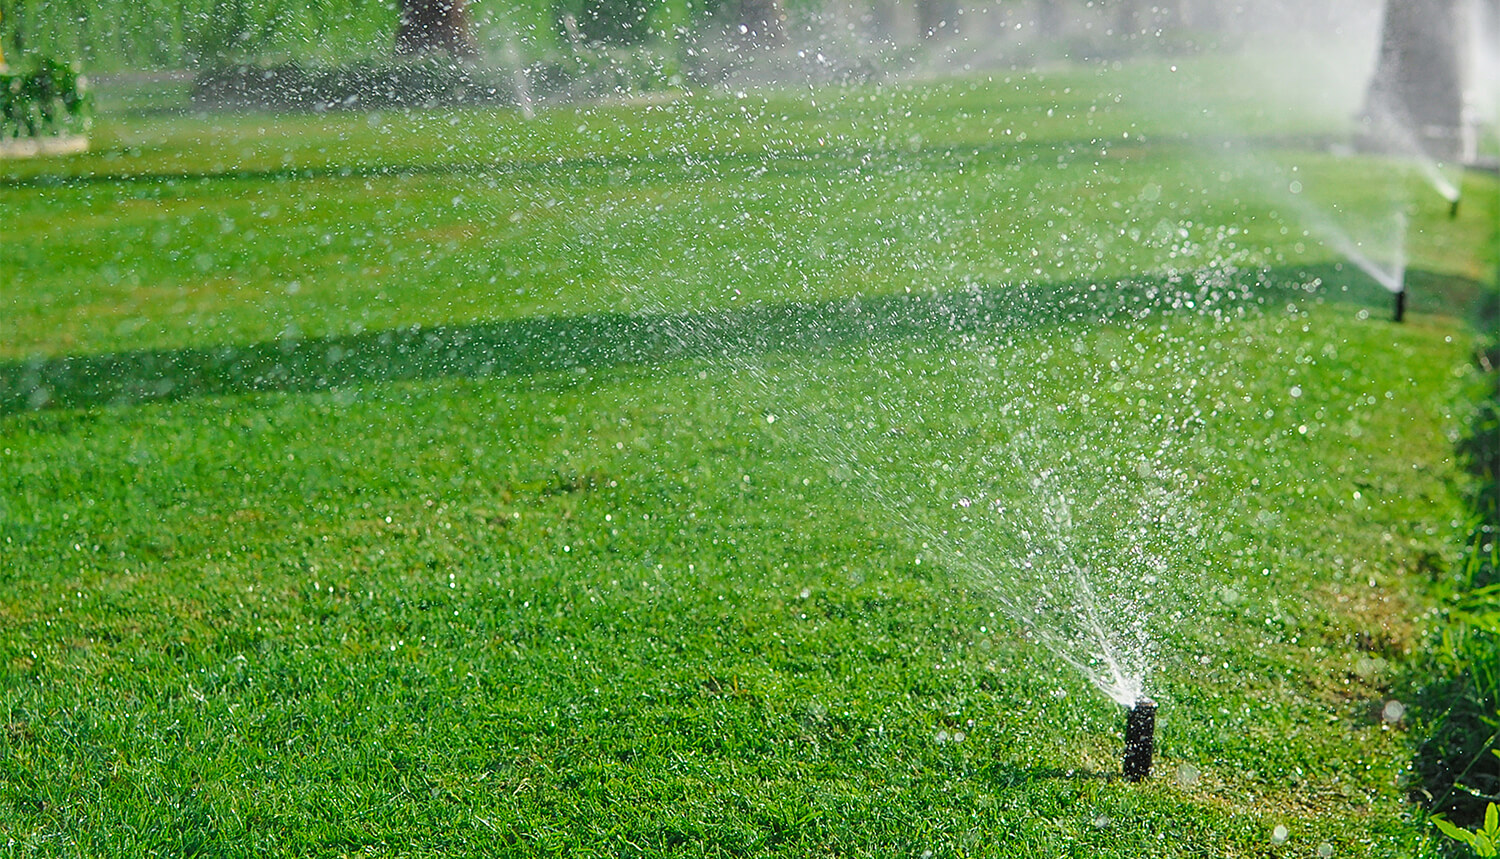 Sprinkler system spraying a lawn